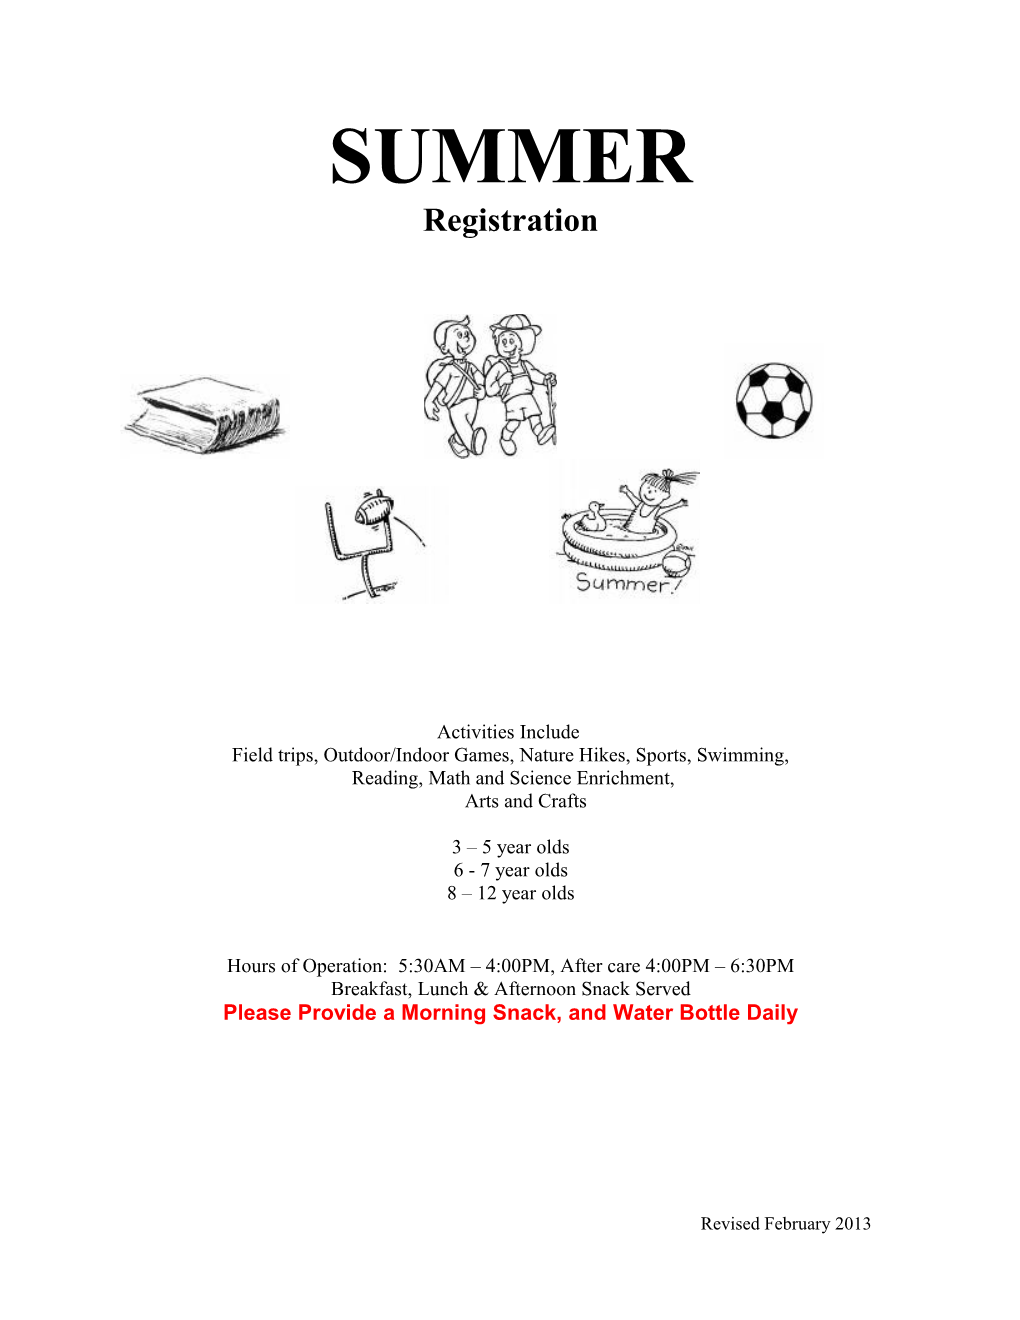 Mount Hope Academy Summer Program